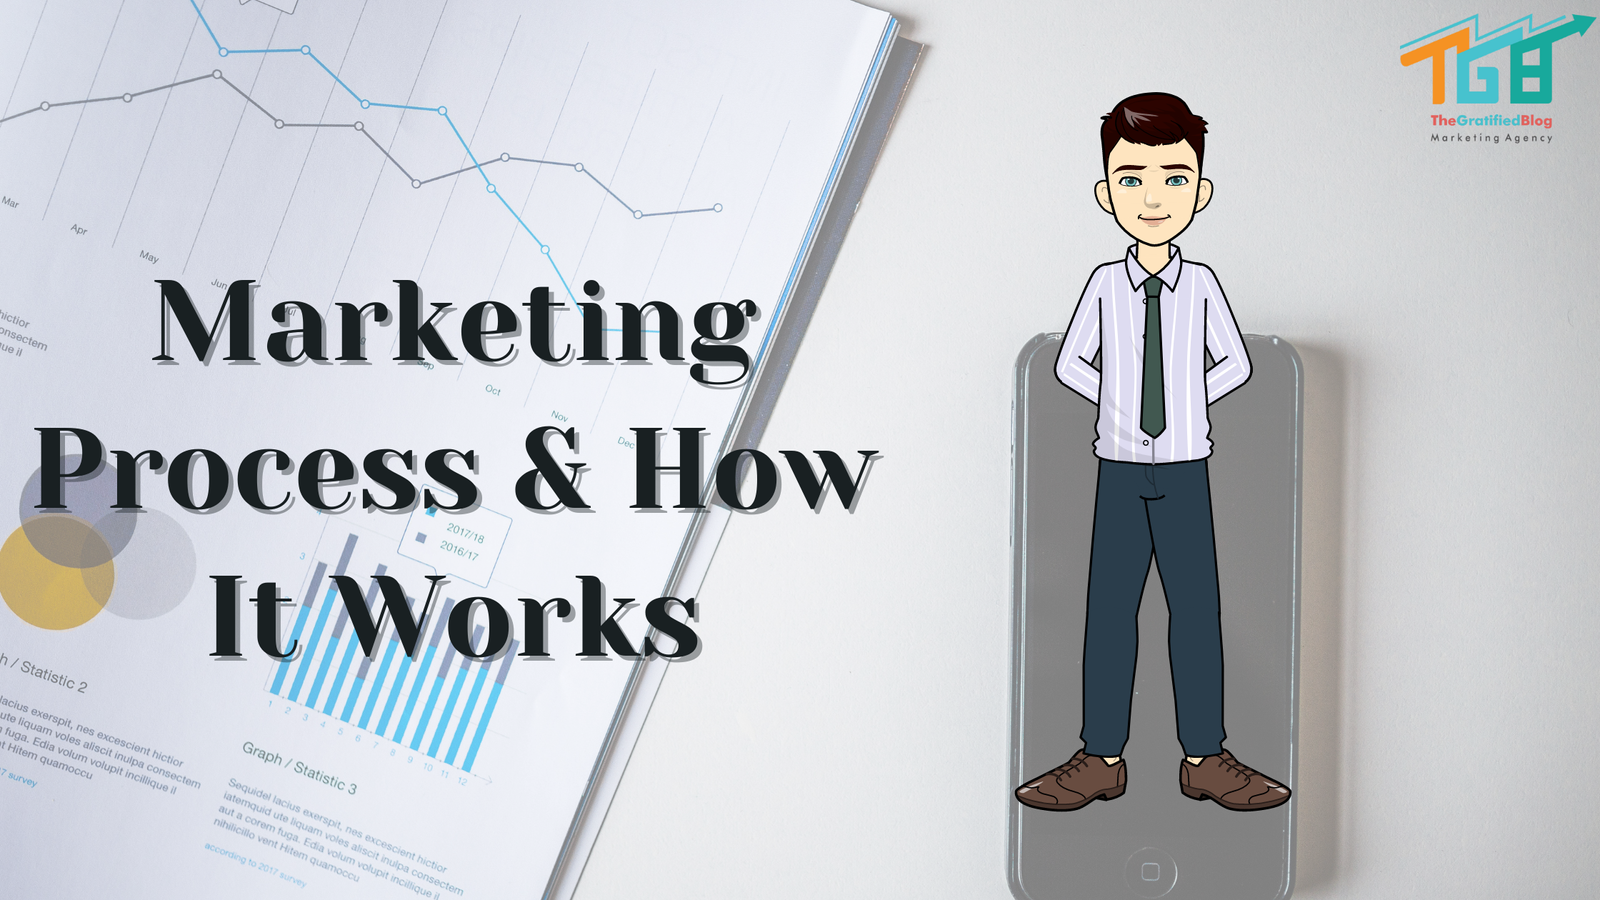 Marketing Process steps